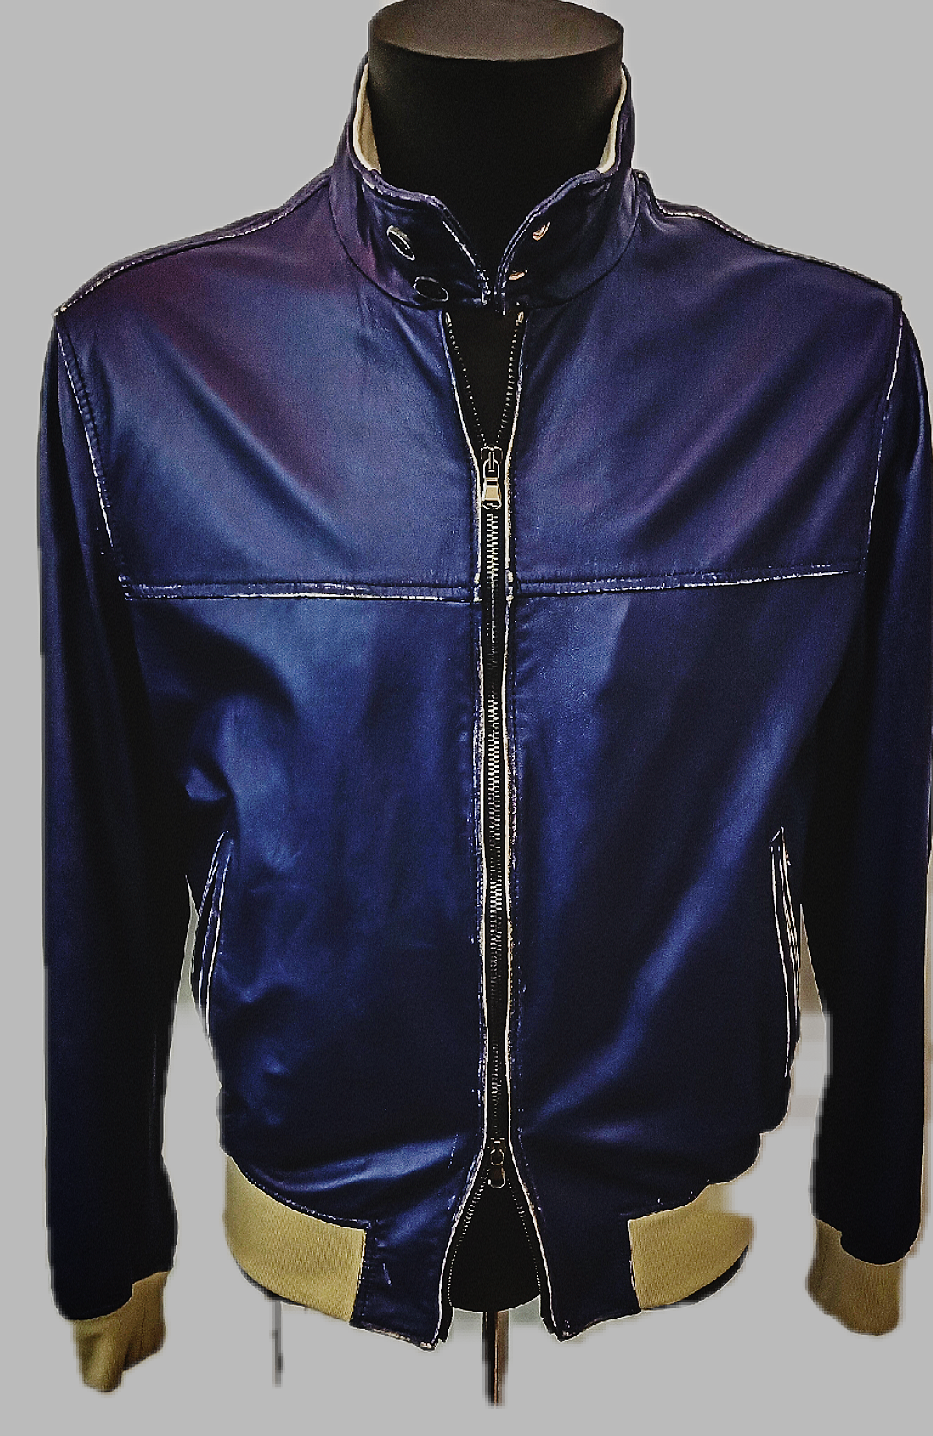 Polo leather jacket